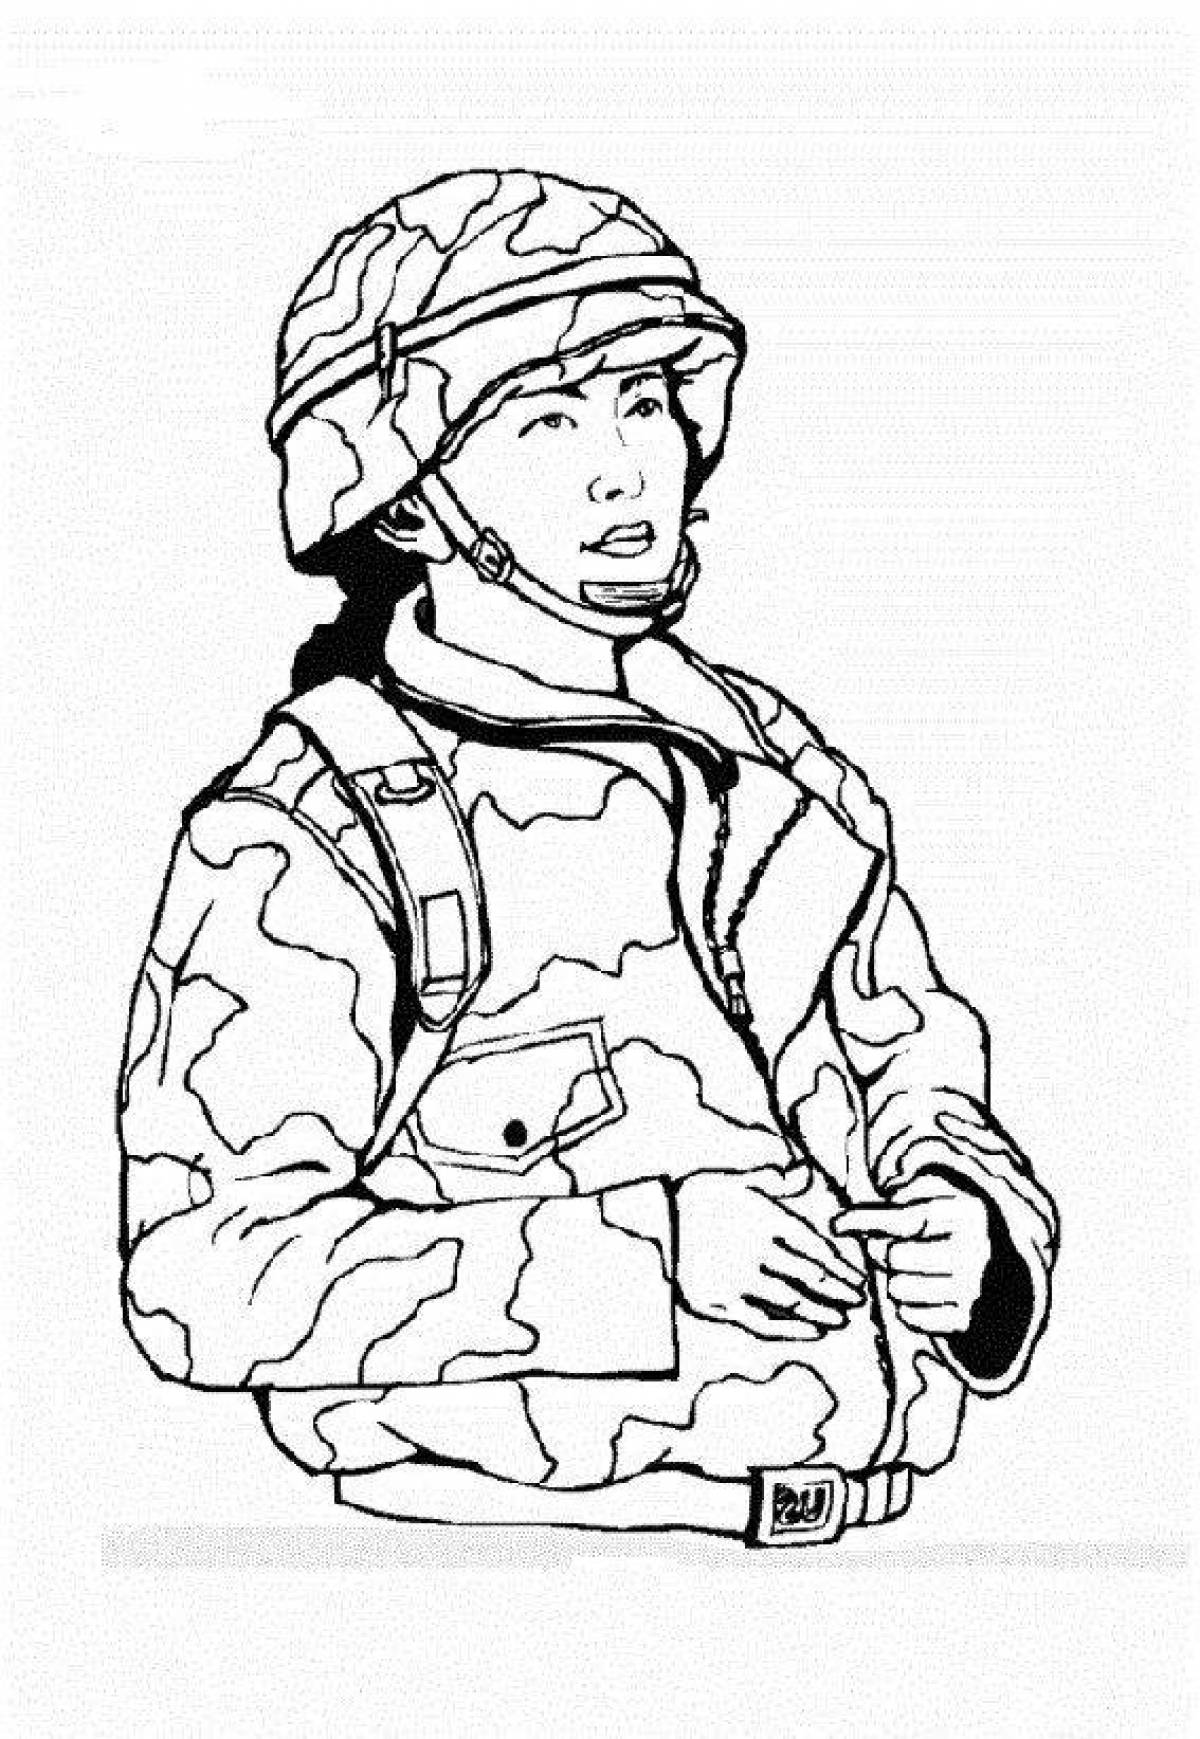 Coloring grandiose figure of a soldier